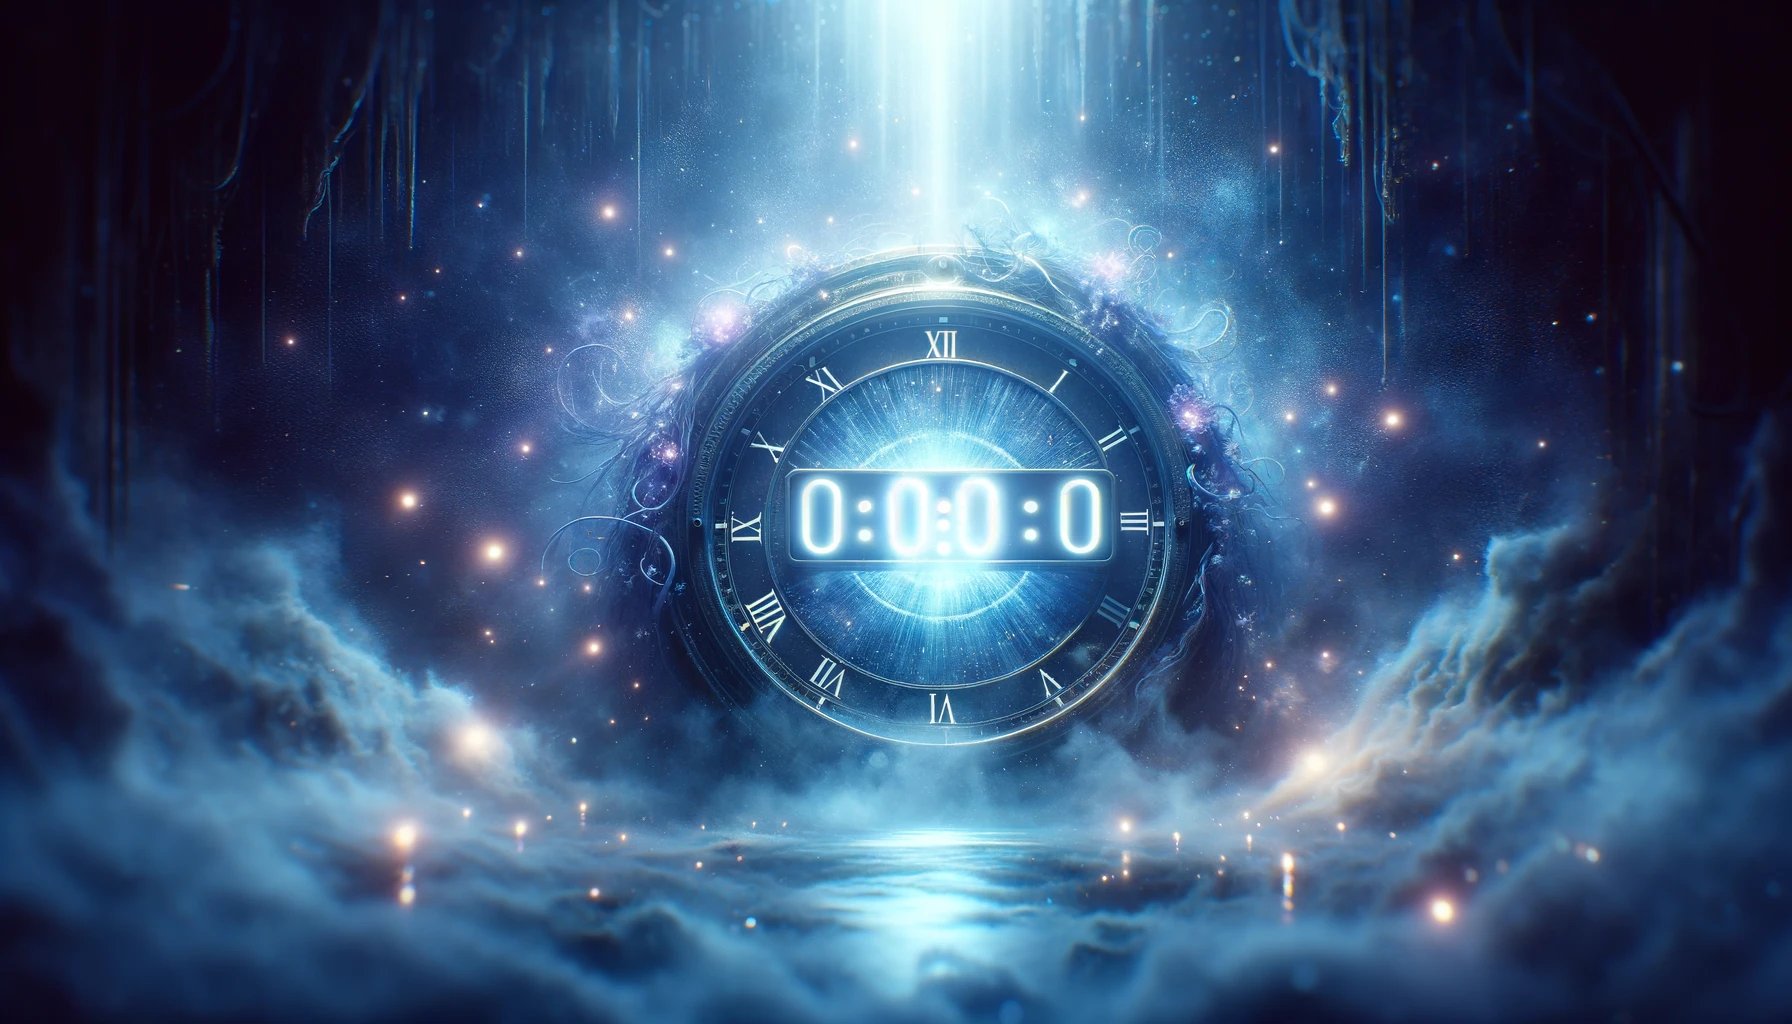 significado espiritual de ver 00:00 en un reloj